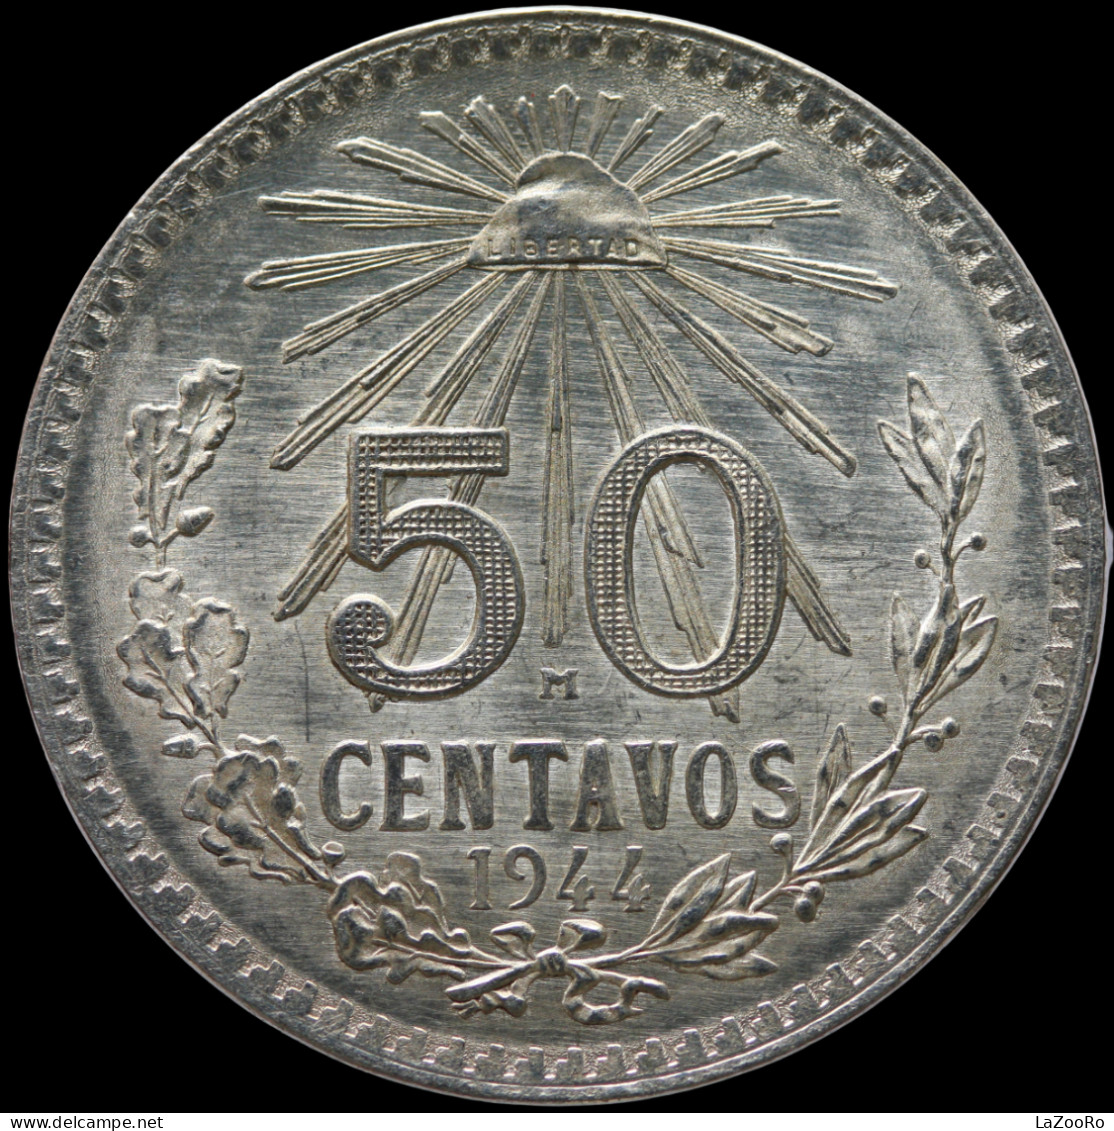 LaZooRo: Mexico 50 Centavos 1944 UNC - Silver - Messico